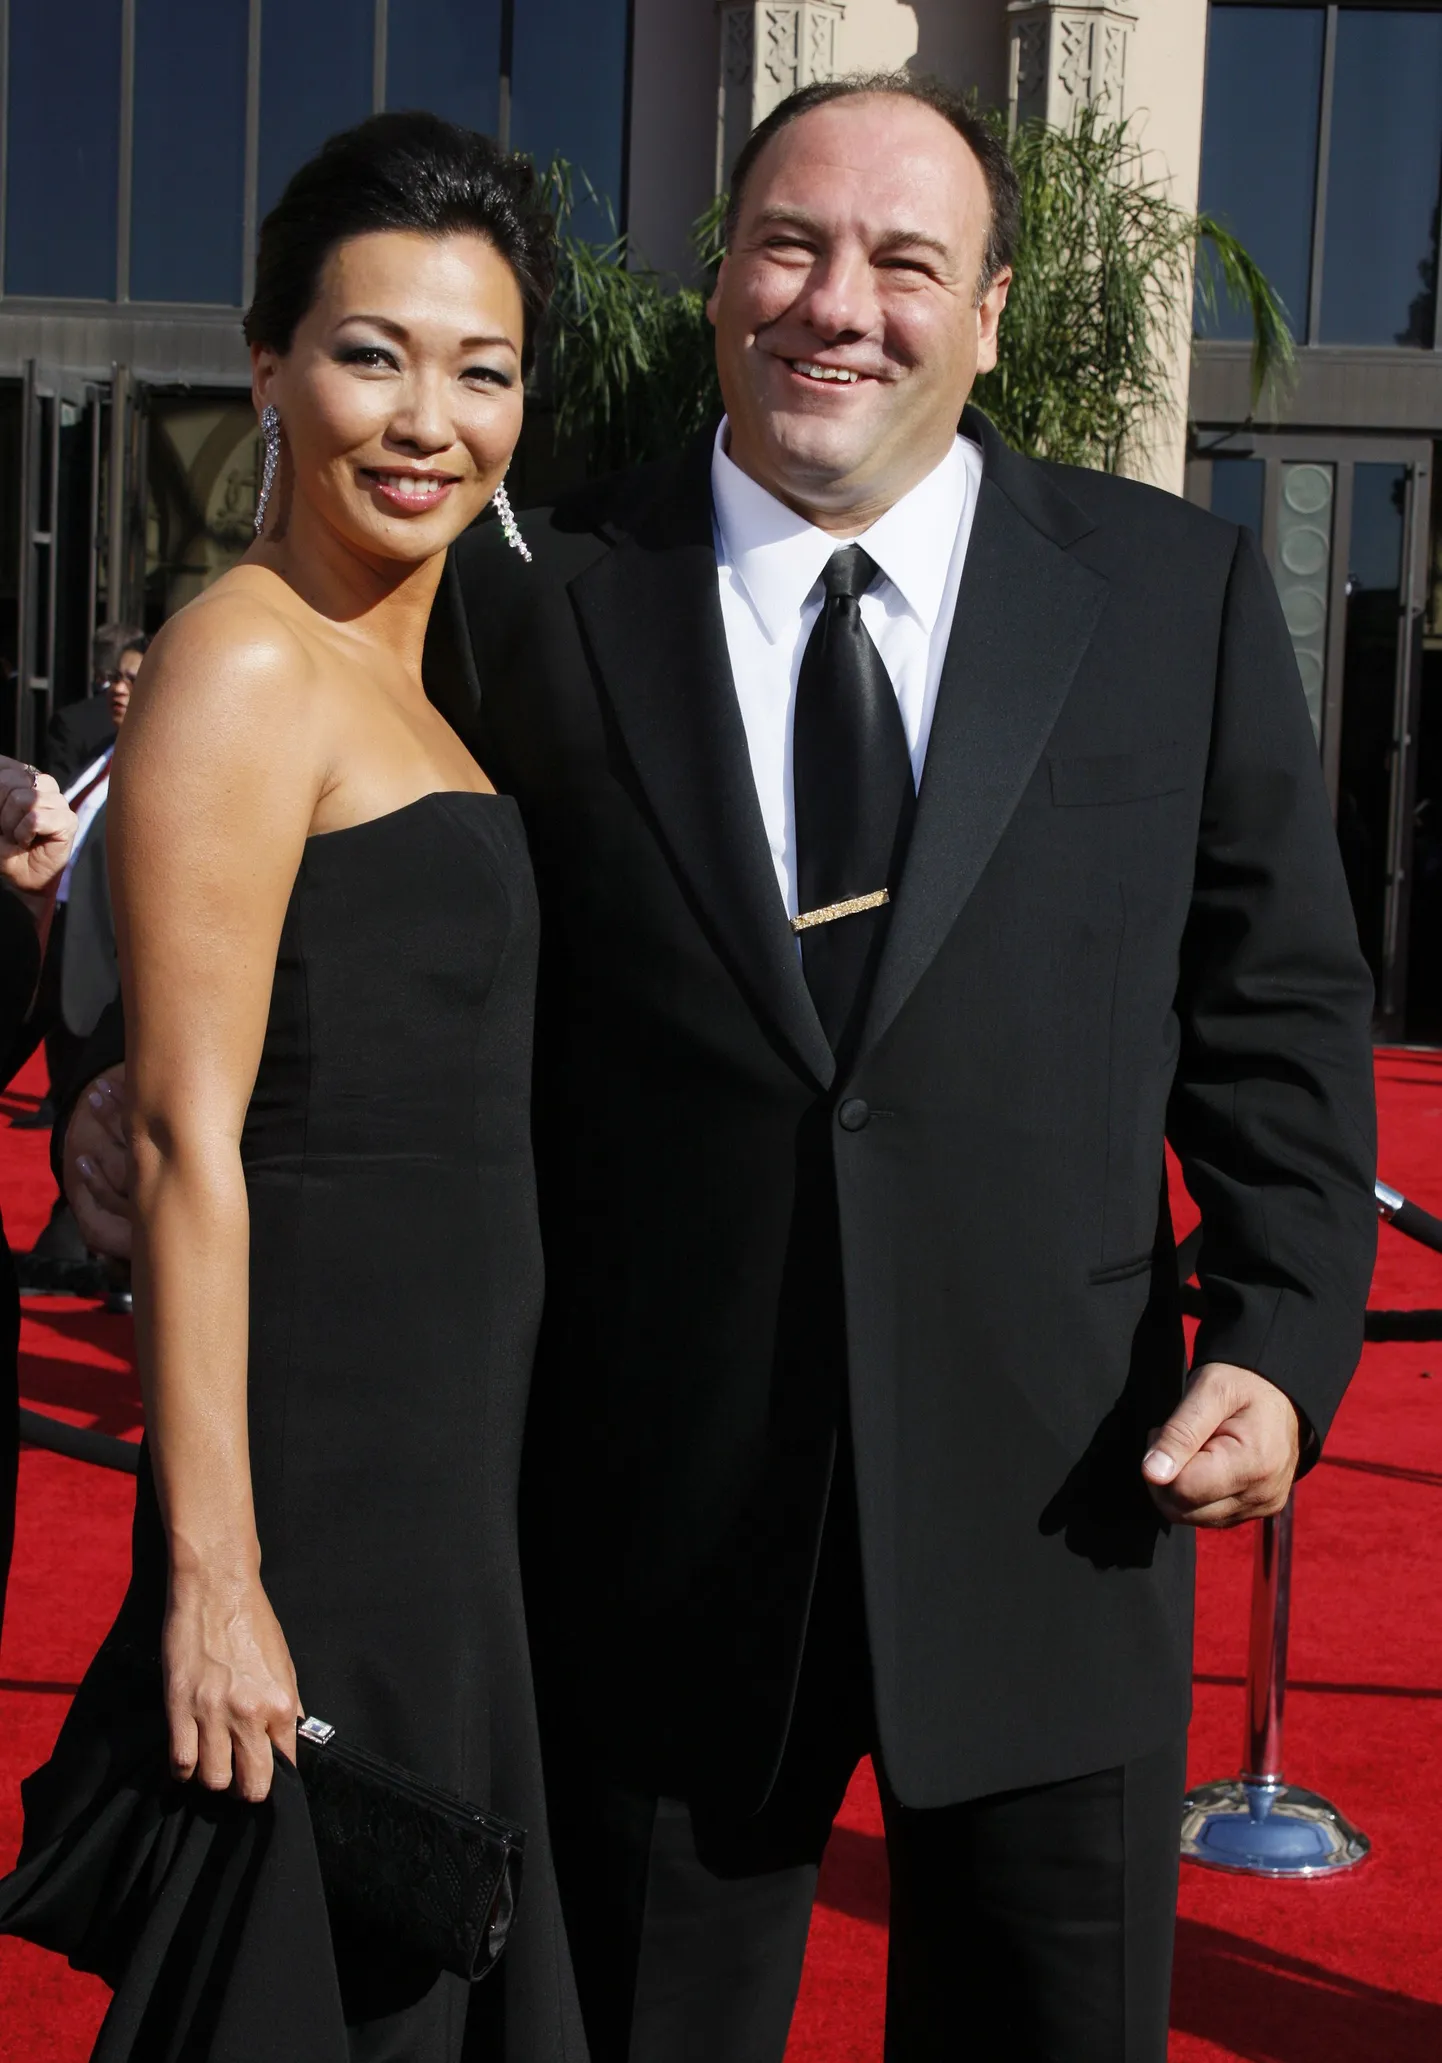 James Gandolfini ja tema kaaslane Deborah Lin